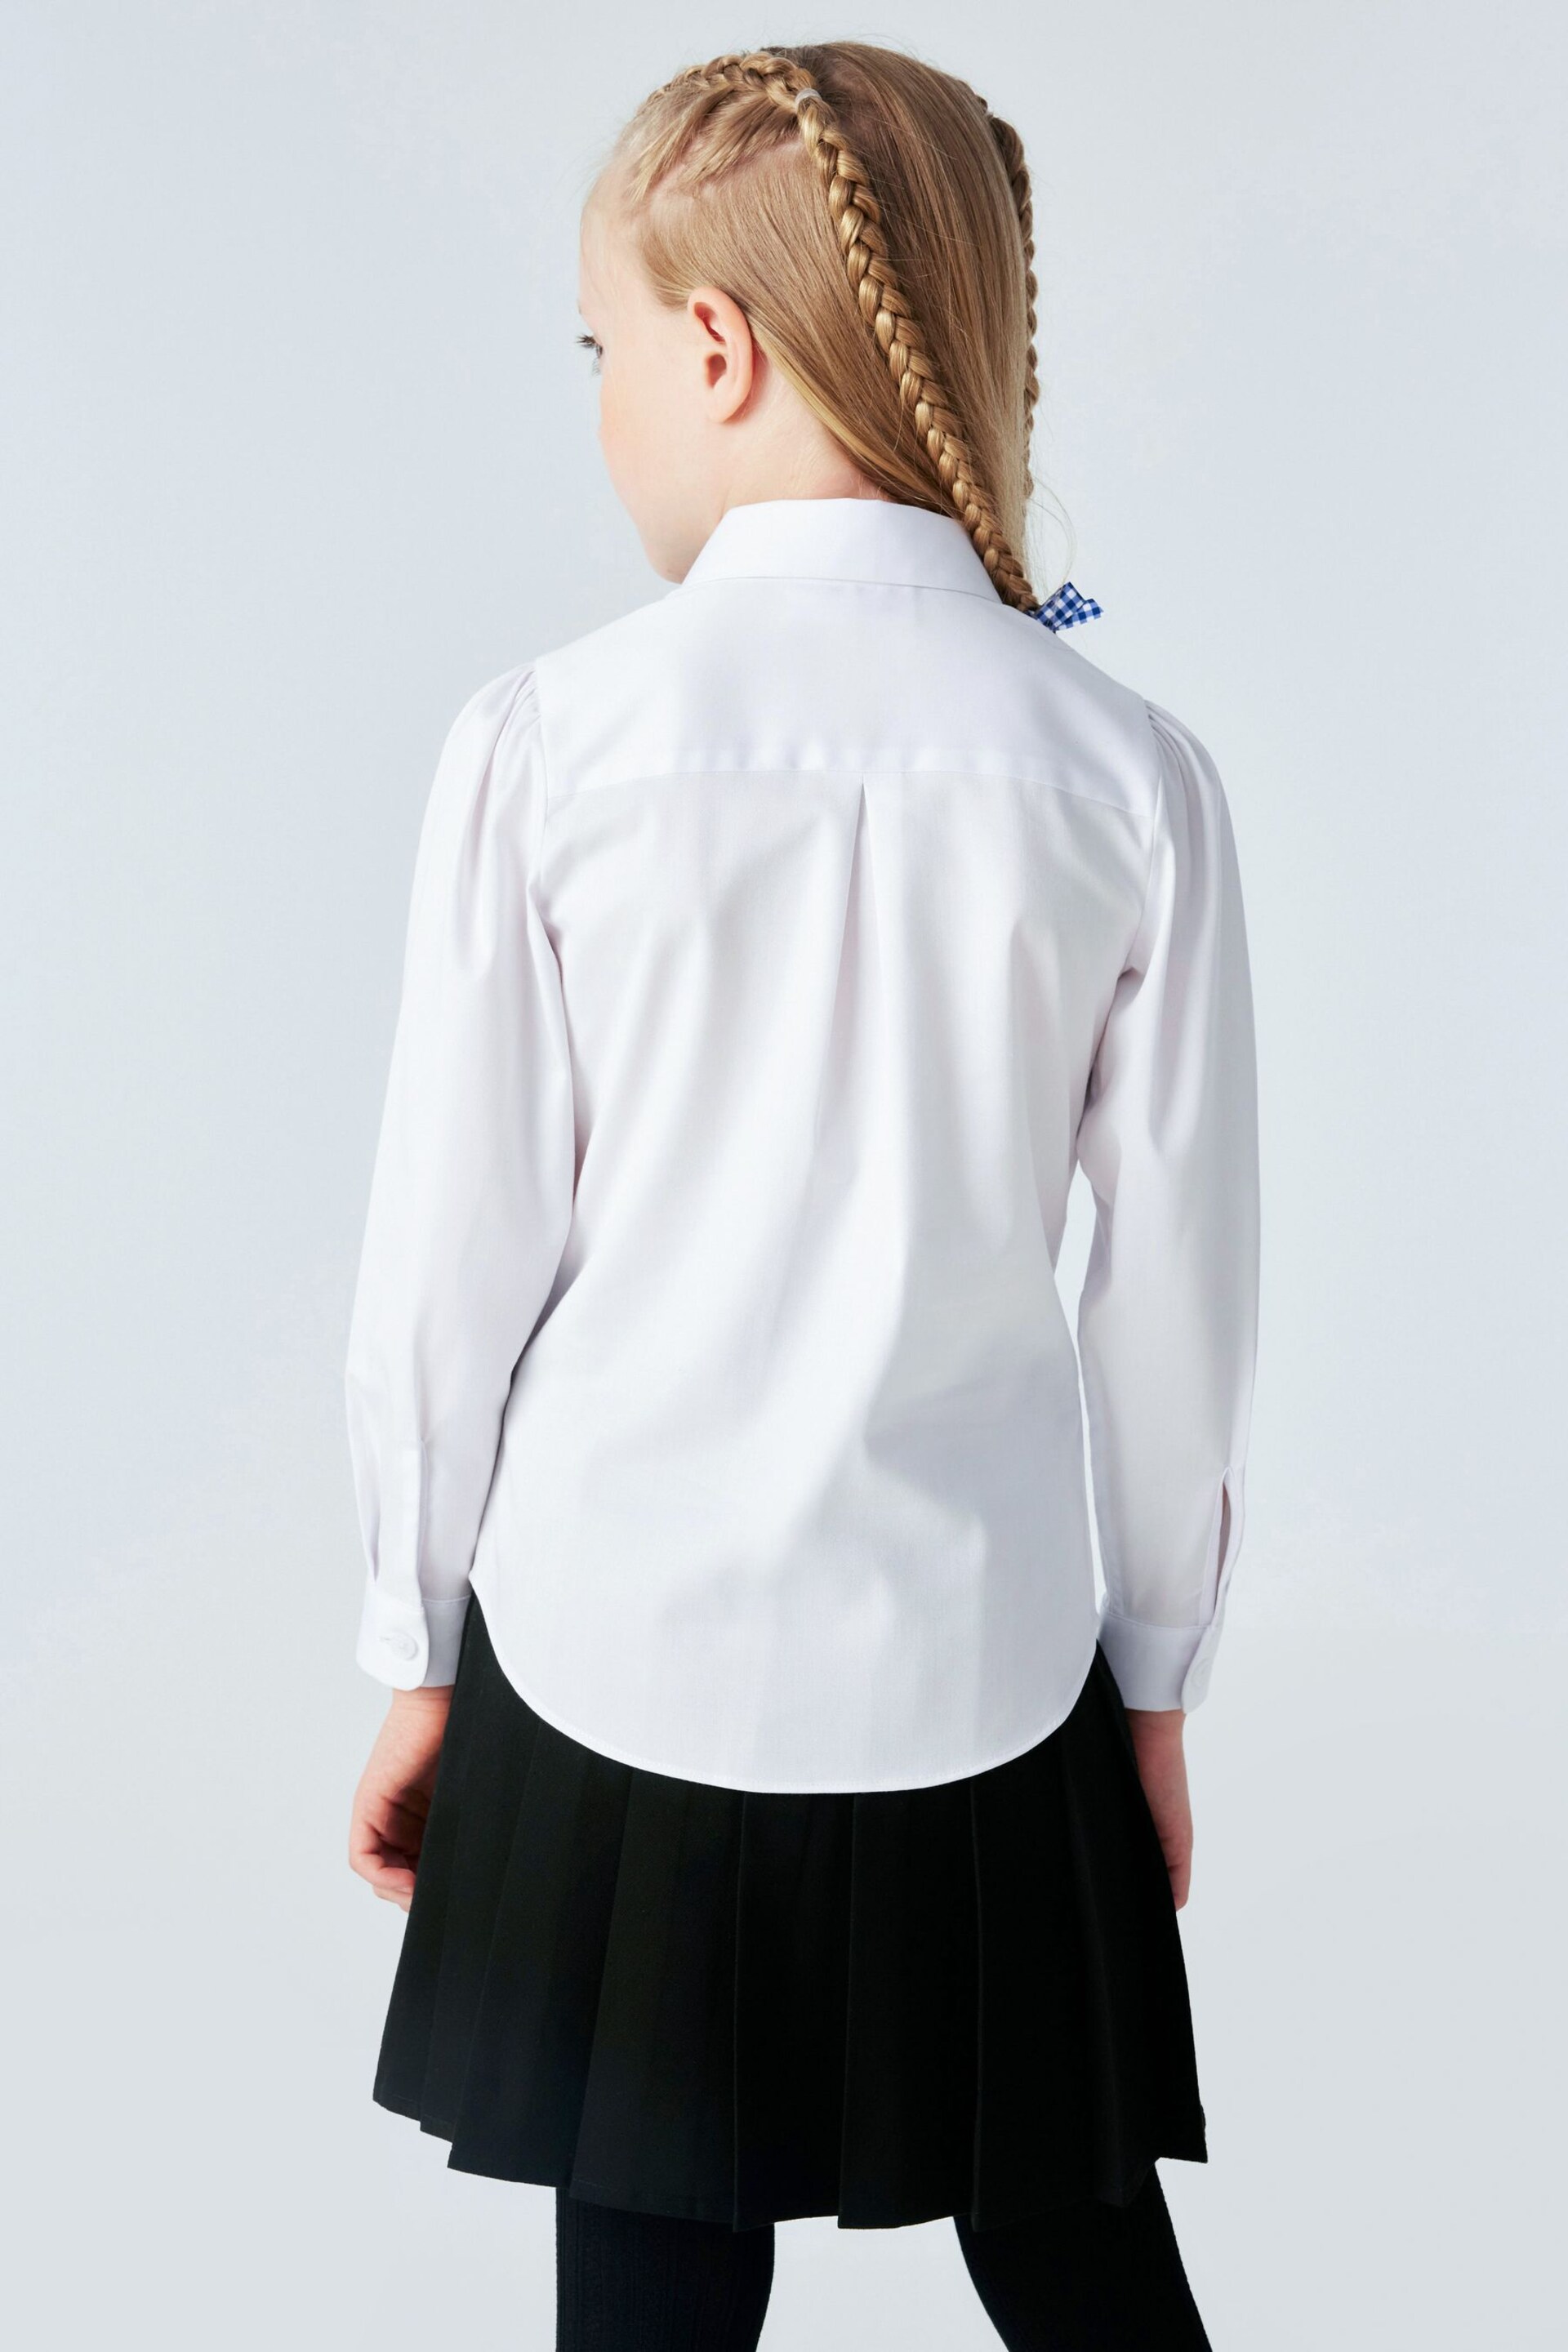 Clarks White Long Sleeve Girls Lace Trim School Shirt - Image 2 of 10